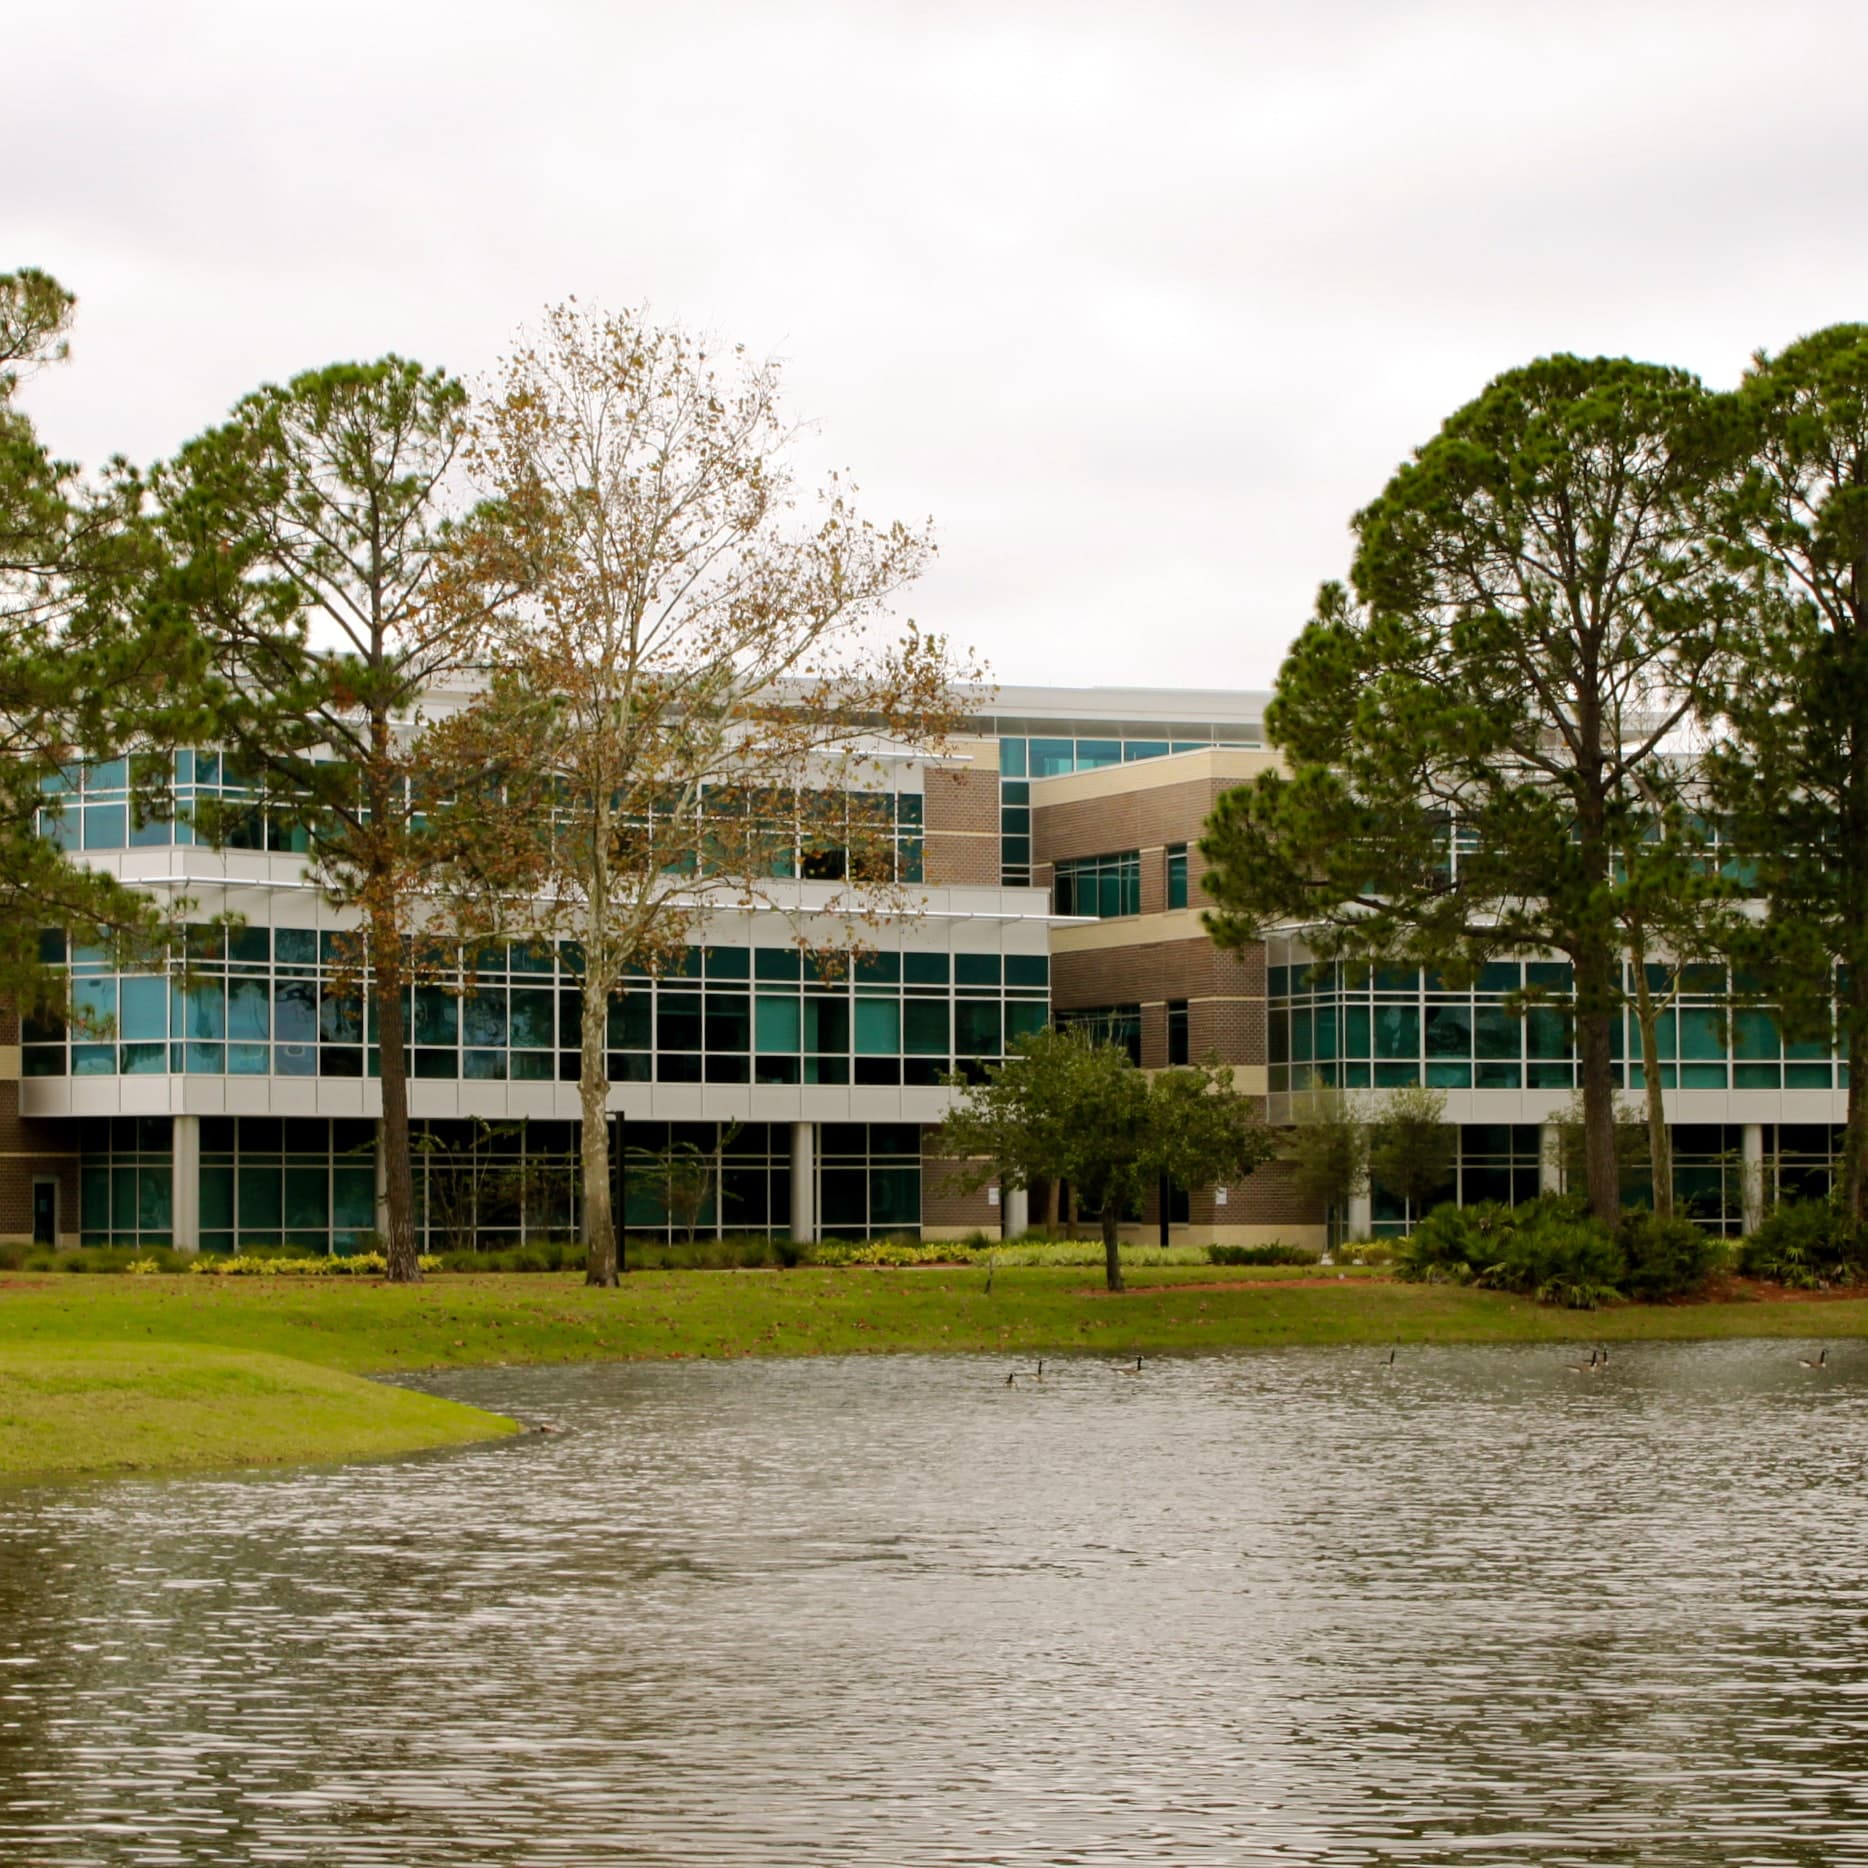 University of North Florida